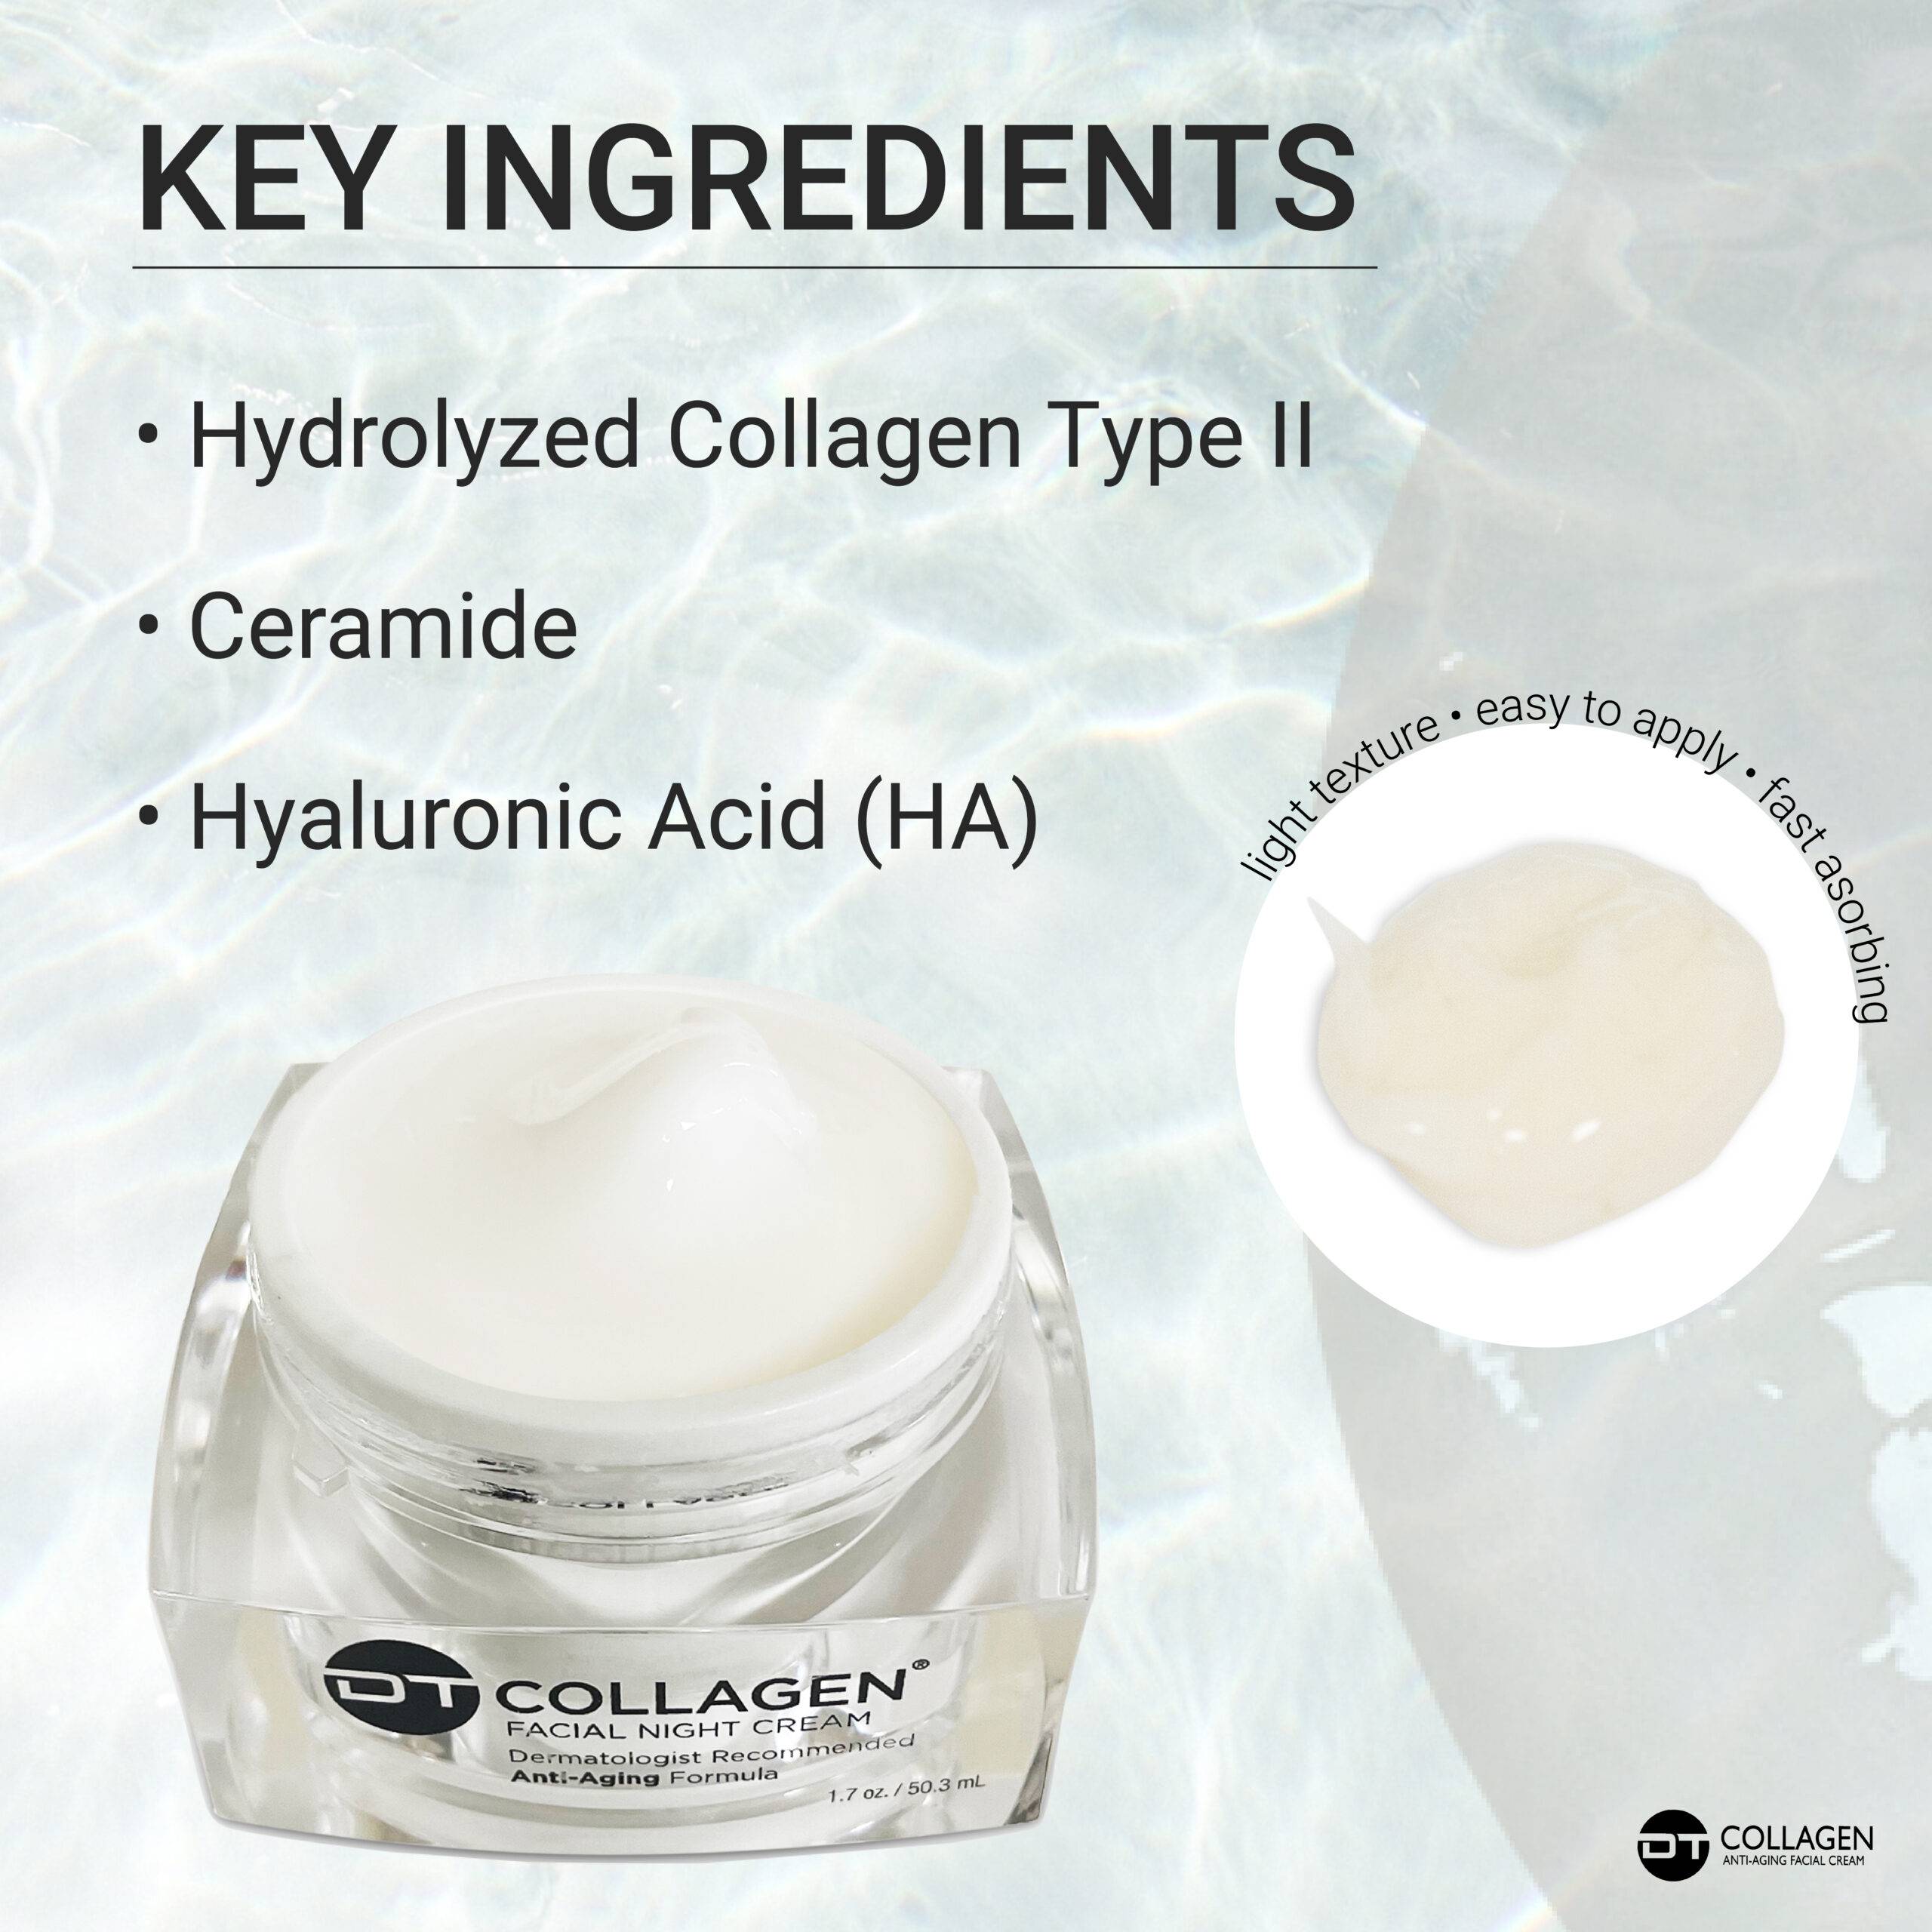 Key ingredients used in facial night cream